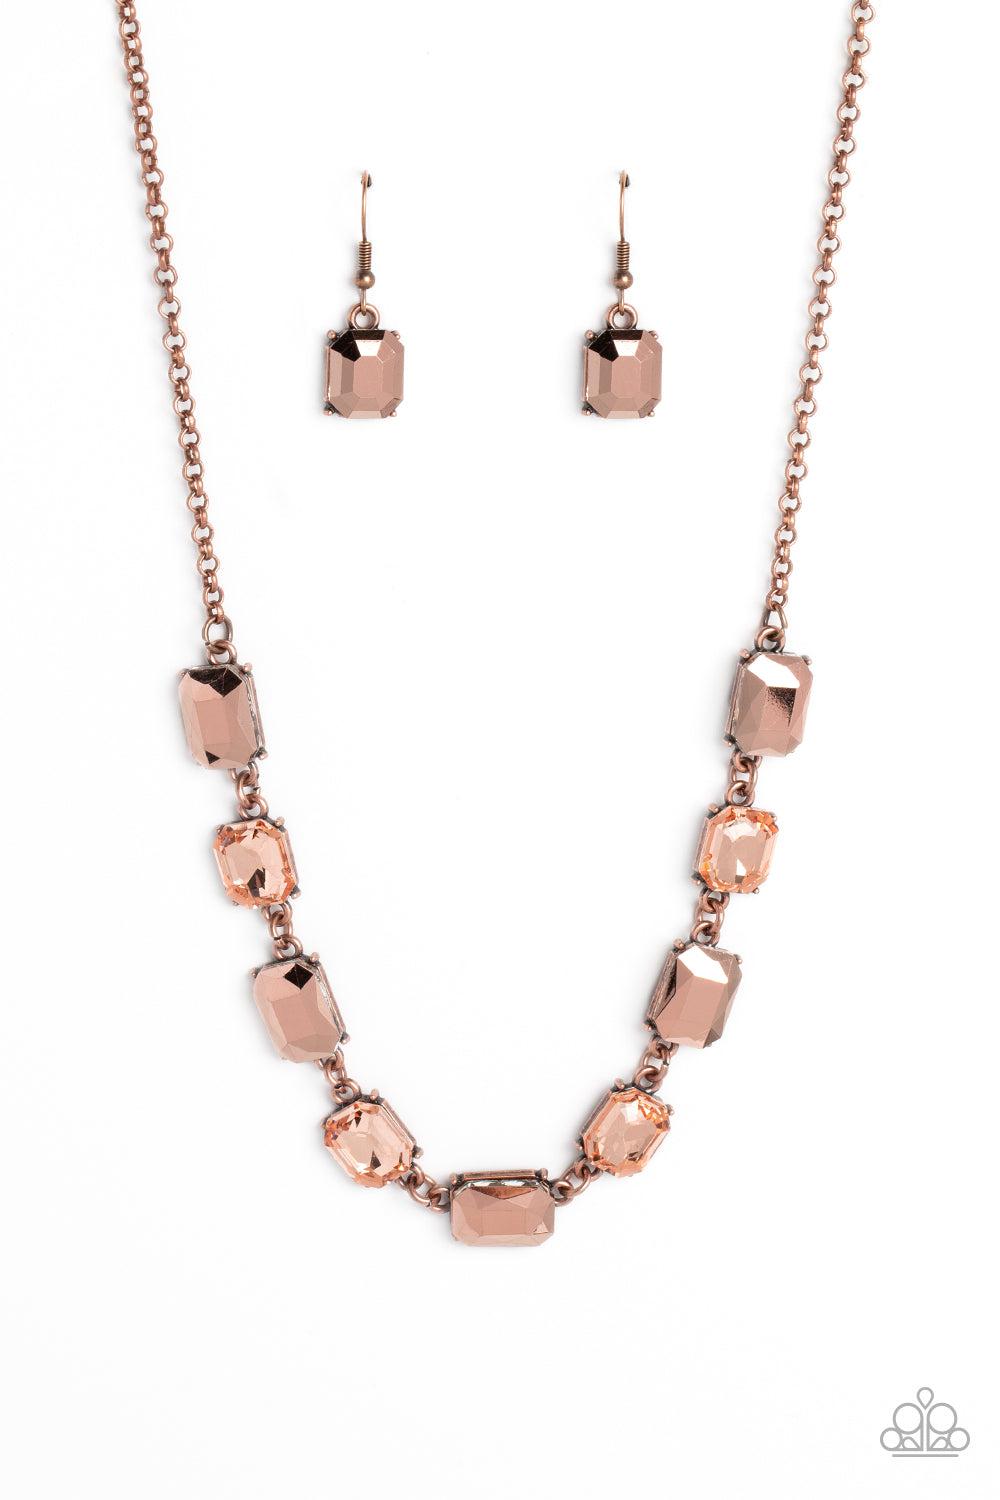 Emerald Envy Copper Rhinestone Necklace - Paparazzi Accessories- lightbox - CarasShop.com - $5 Jewelry by Cara Jewels